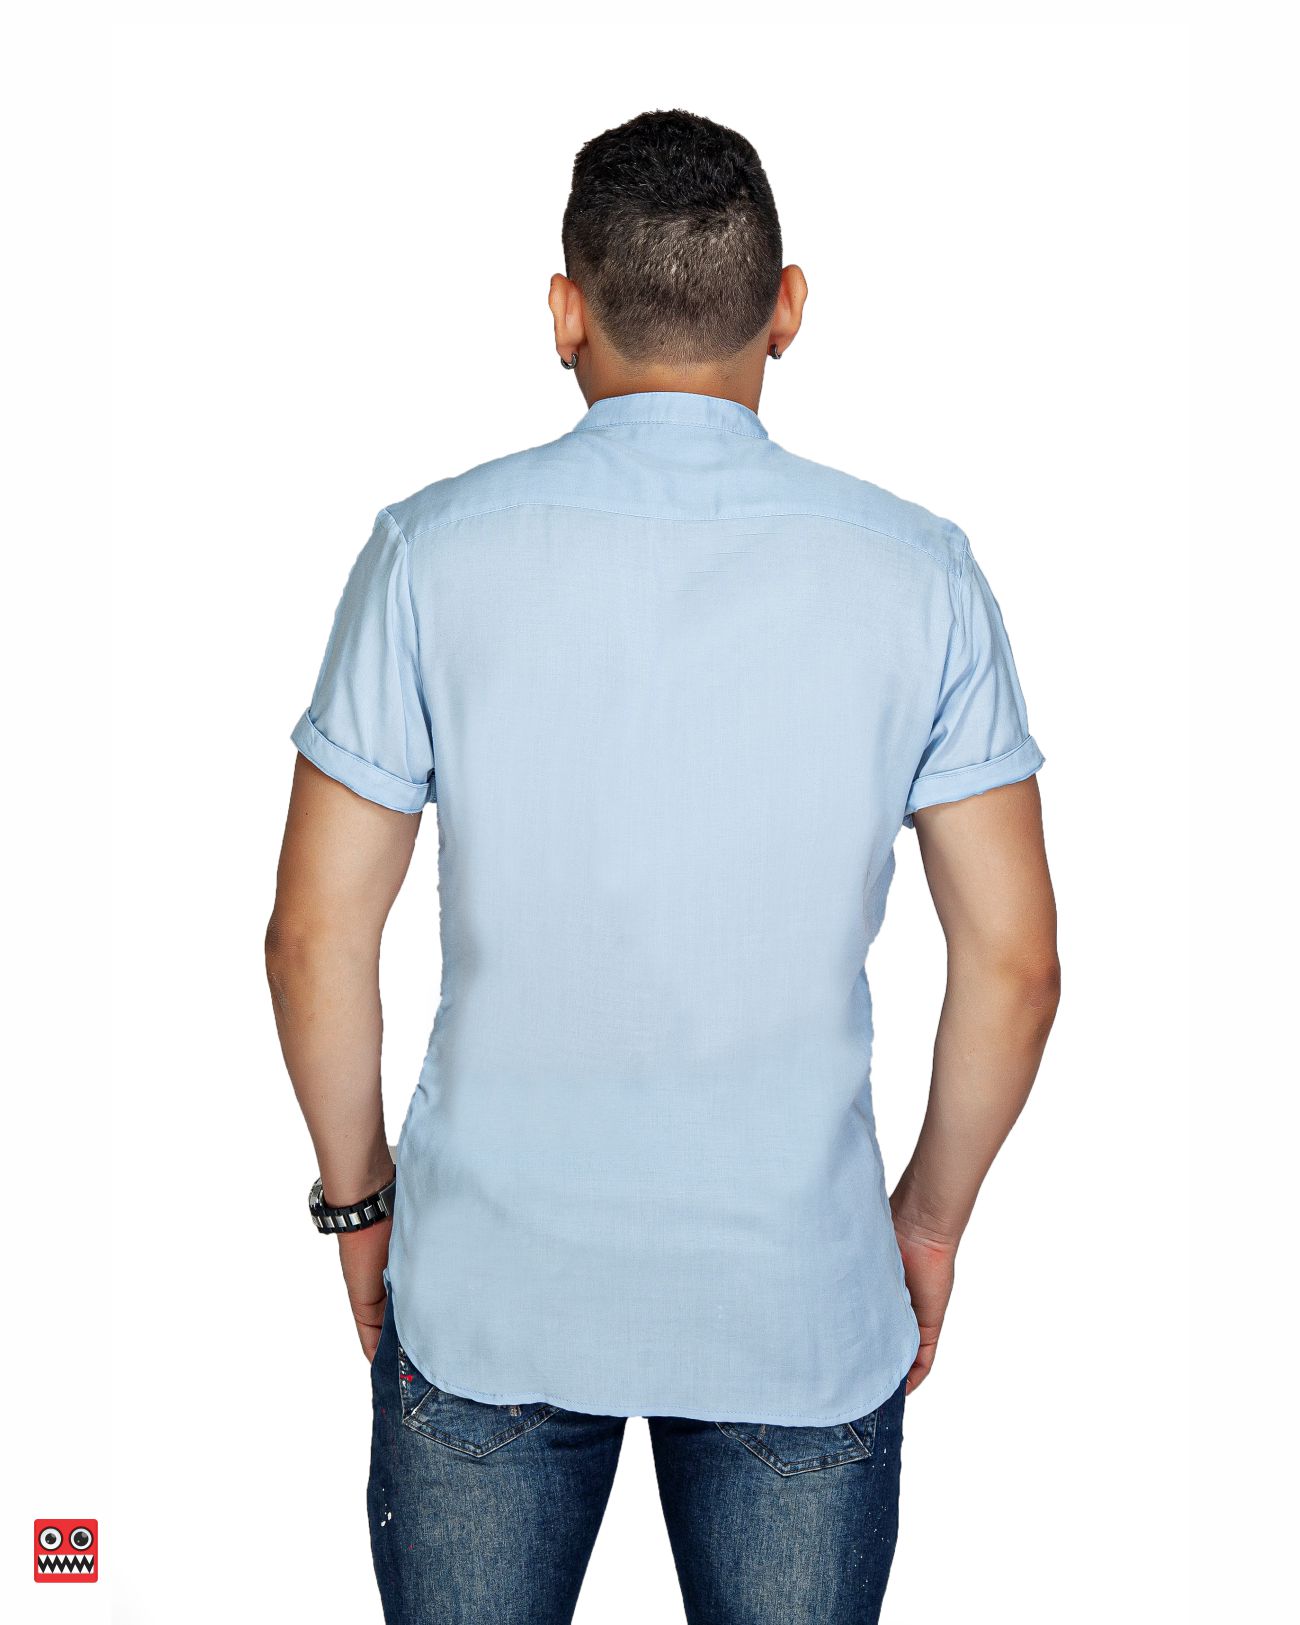 ref 1784 02 Camisa MC azul claro , tela fria 100% viscosa.